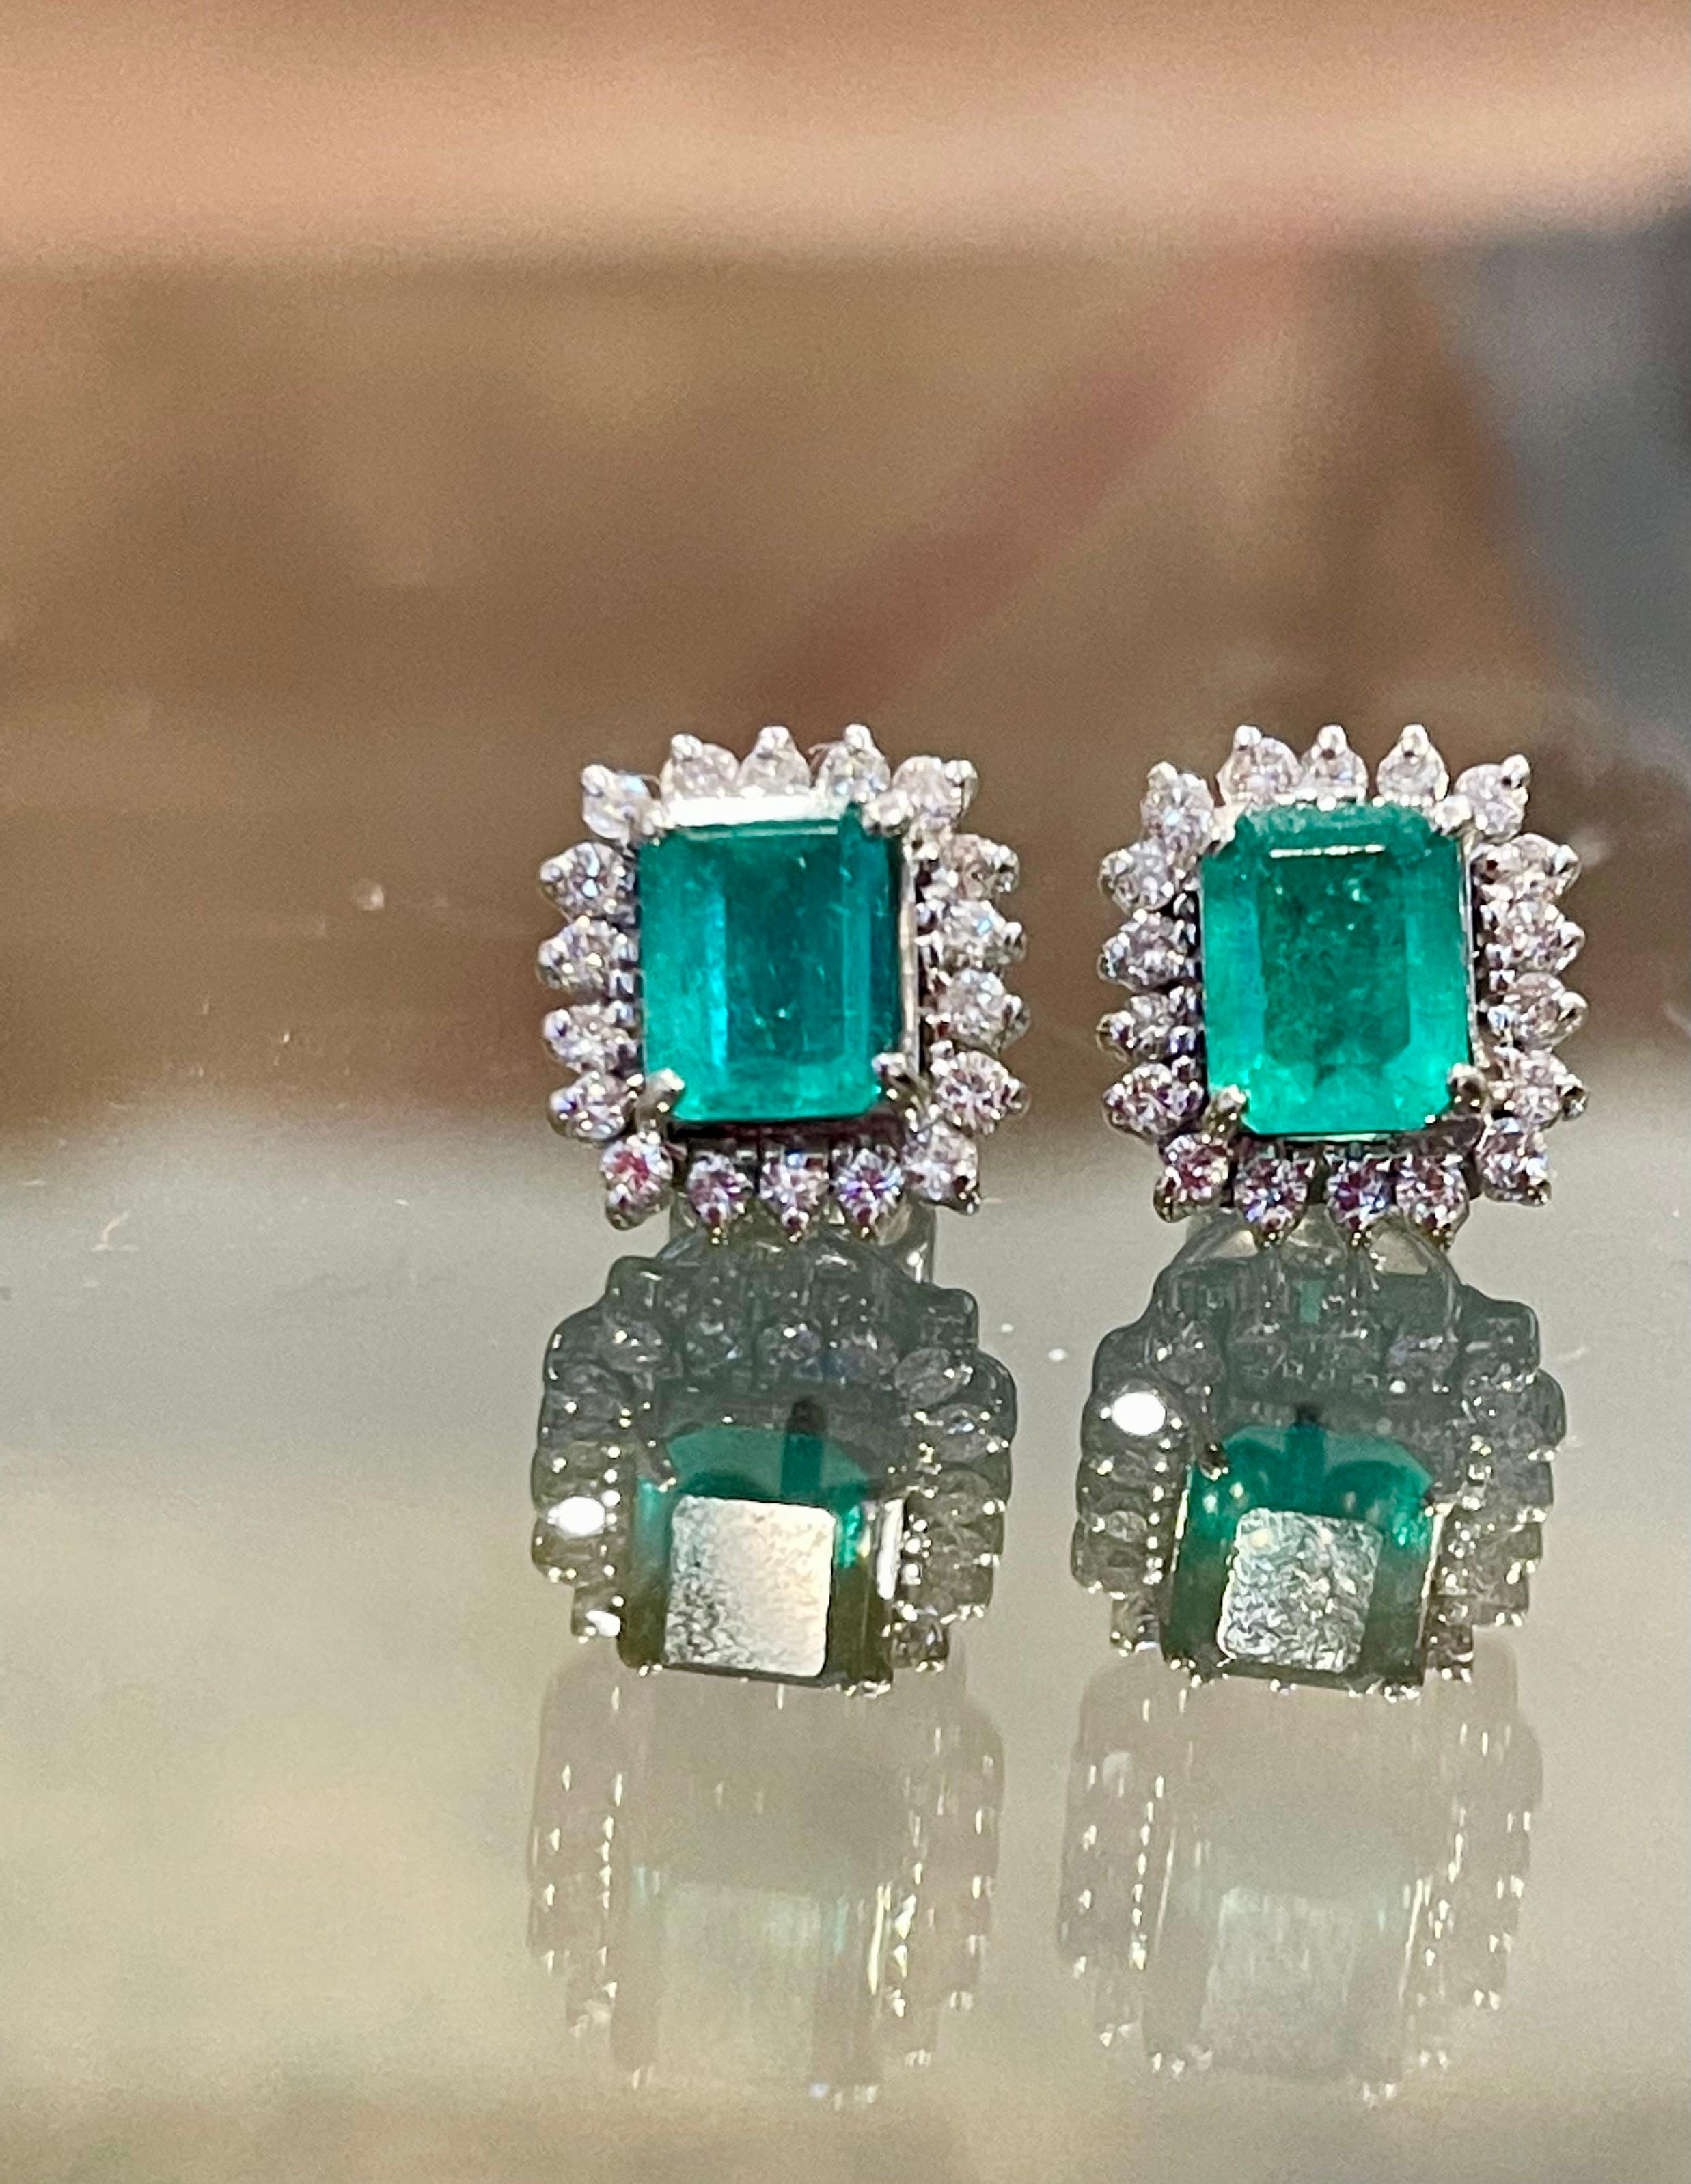 2. 25 Ct Colombian Emerald Cut Emerald & Diamond Earrings 18 Karat White Gold 6